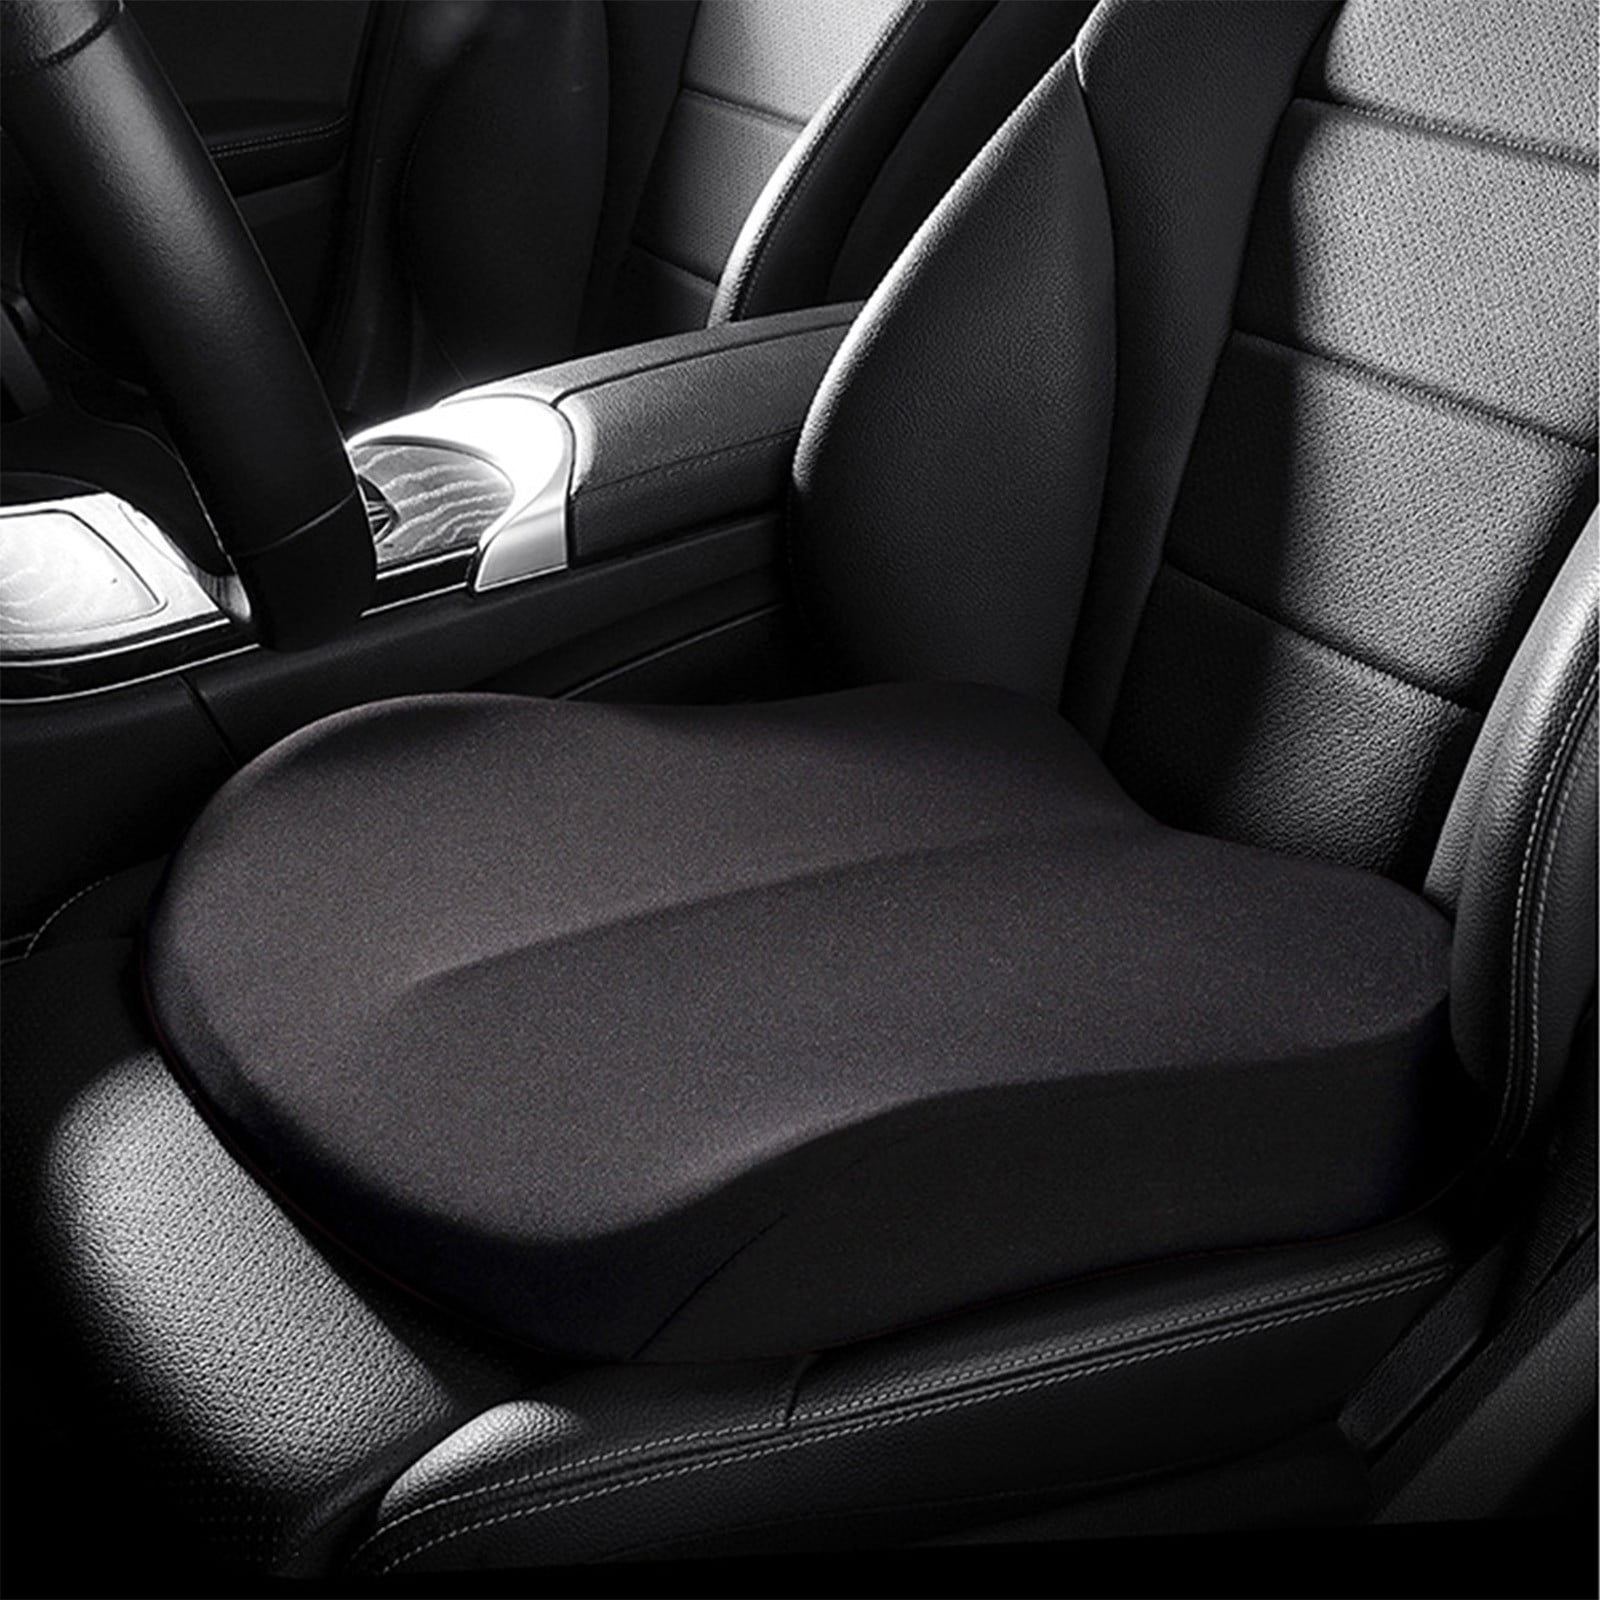 Xeovhv Xeovhvlj Clearance Car Wedge Seat Cushion for Car Seat Driver/Passenger- Wedge Car Seat Cushions for Driving Improve Vision/Posture - Memory Foam Car